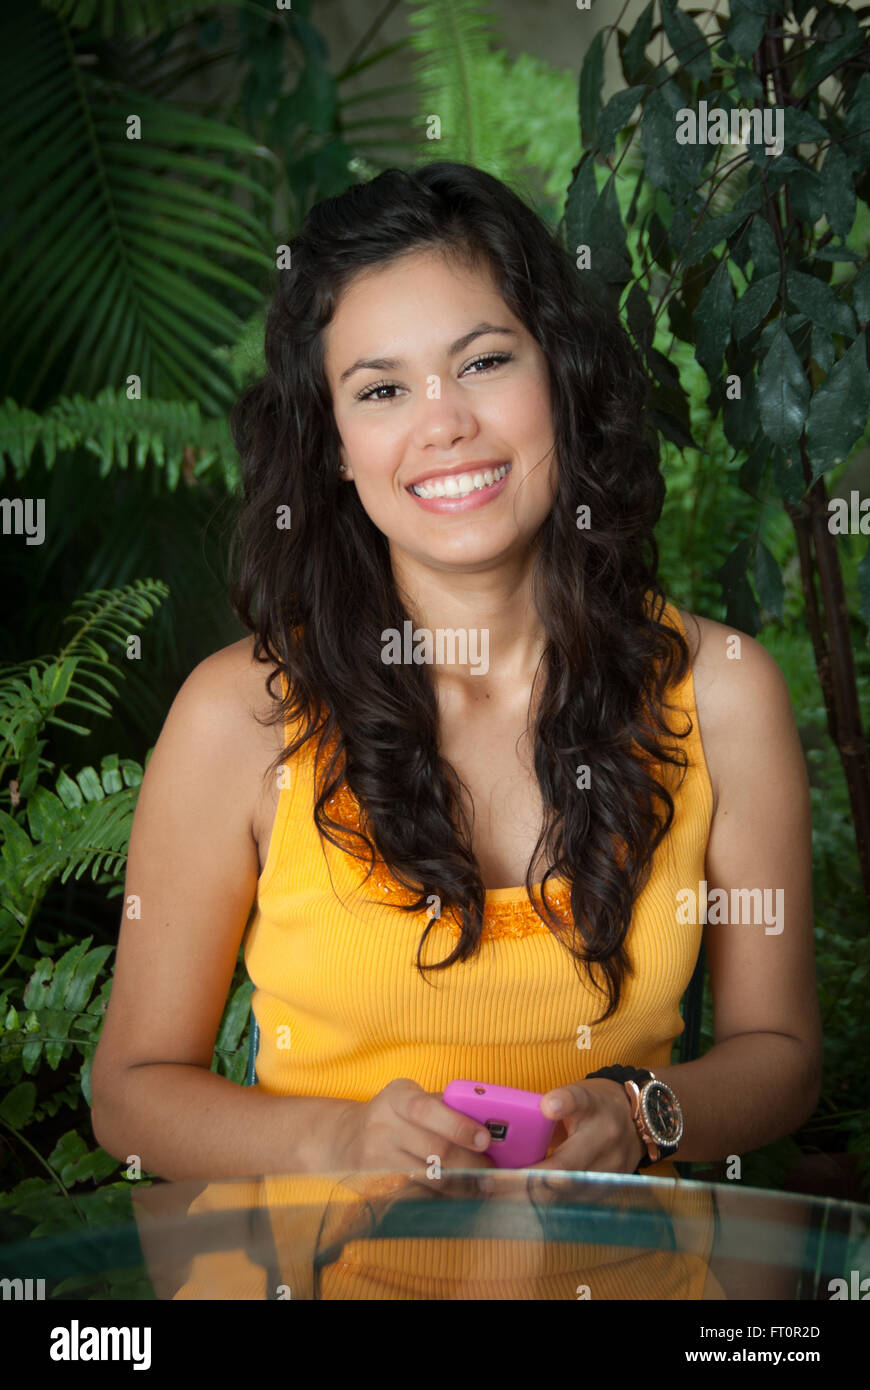 Lächelnde junge Hispanic Frau mit Handy - Puerto Vallarta, Mexiko #613PV Stockfoto